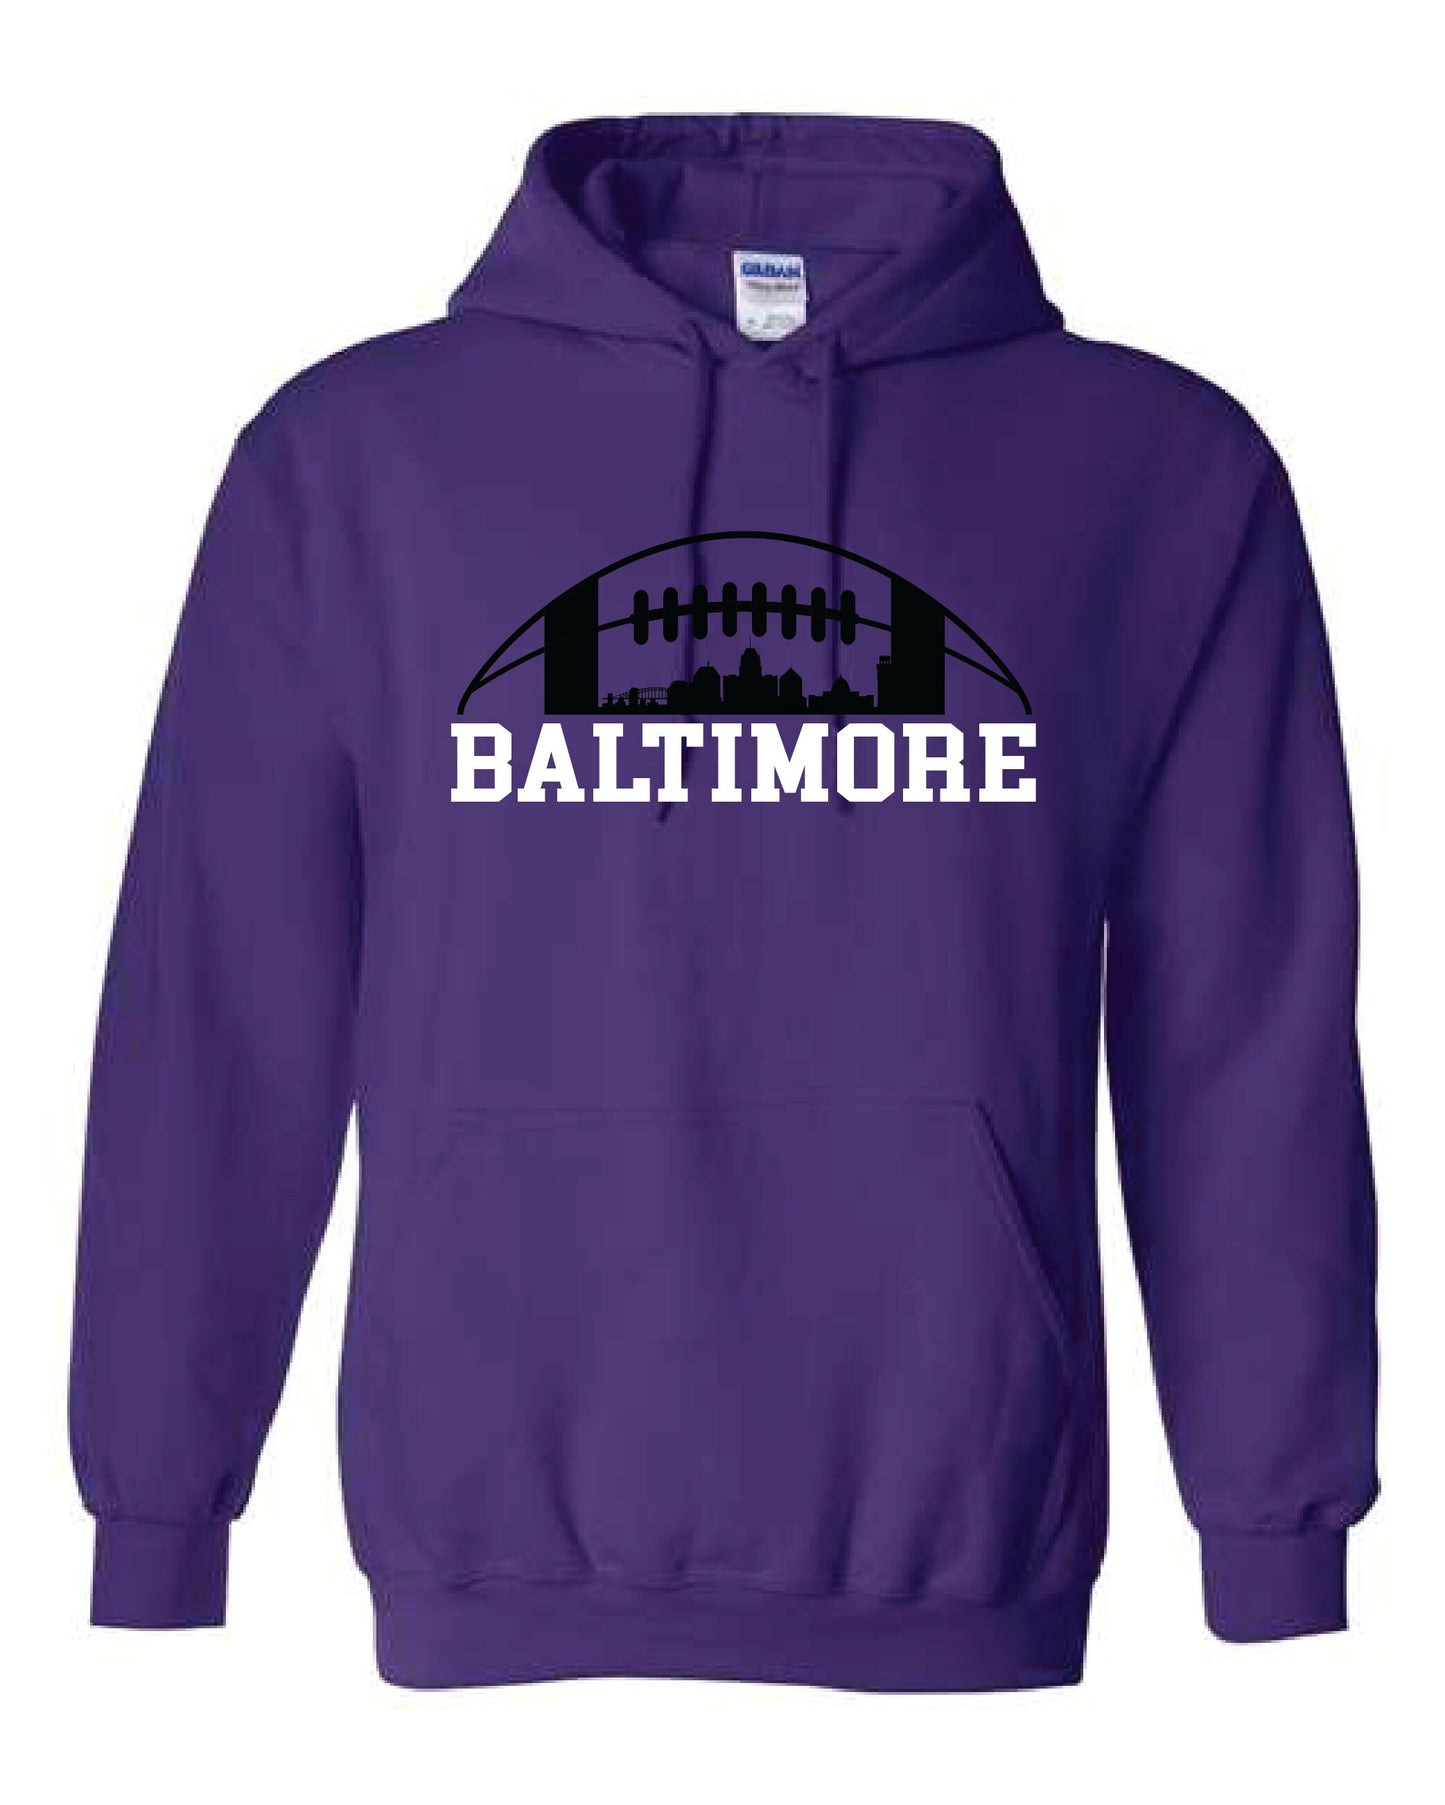 Baltimore Football Skyline Hoodie - Football Fans Hoodie - Football Fan Gift - Baltimore Fan Gift - Rep your football team - Rep your City